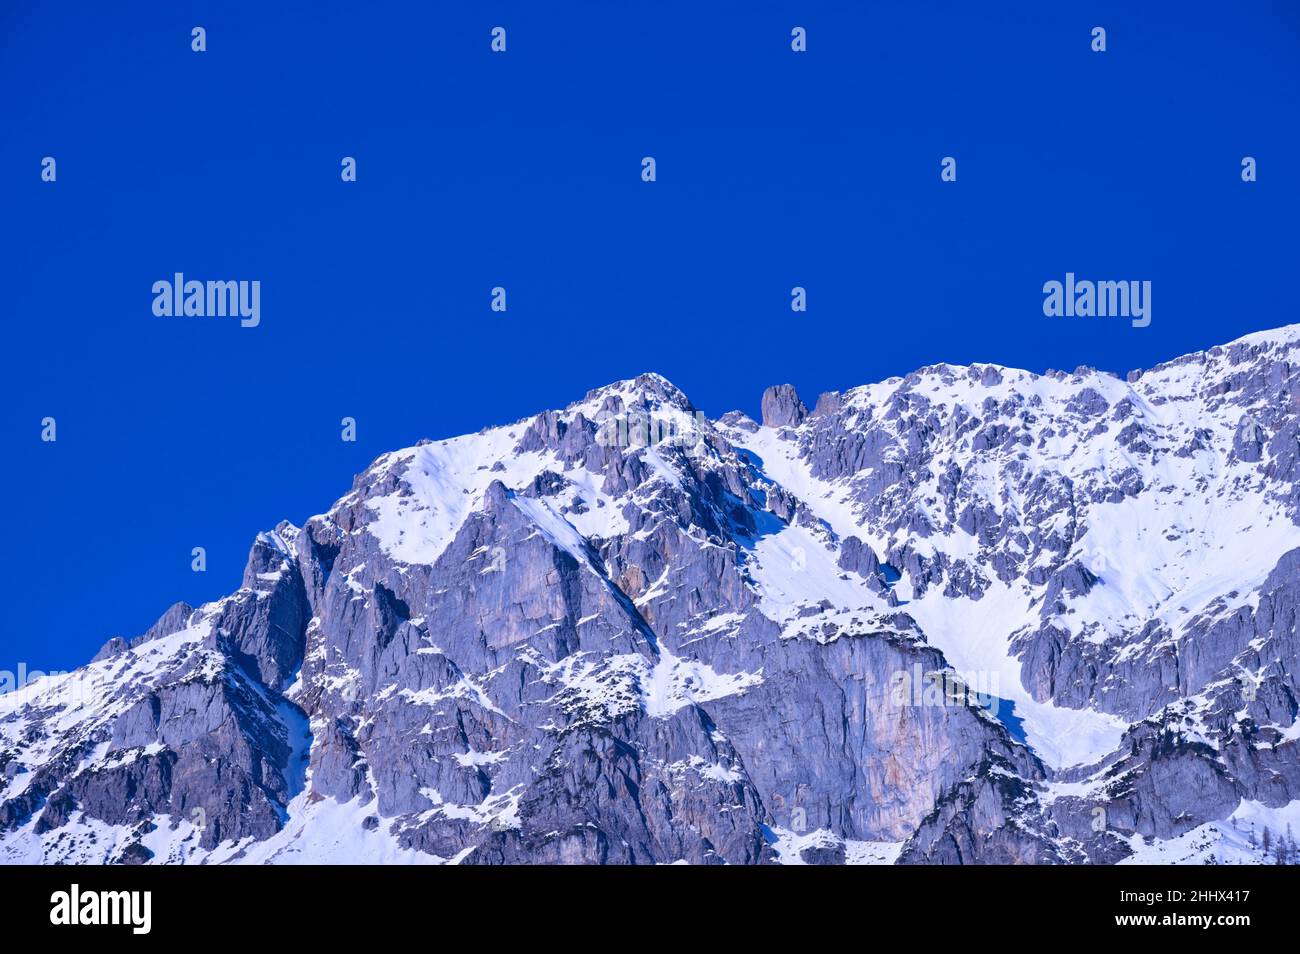 Felsiger Berg mit Schnee bedeckt gegen blauen Himmel Stockfoto